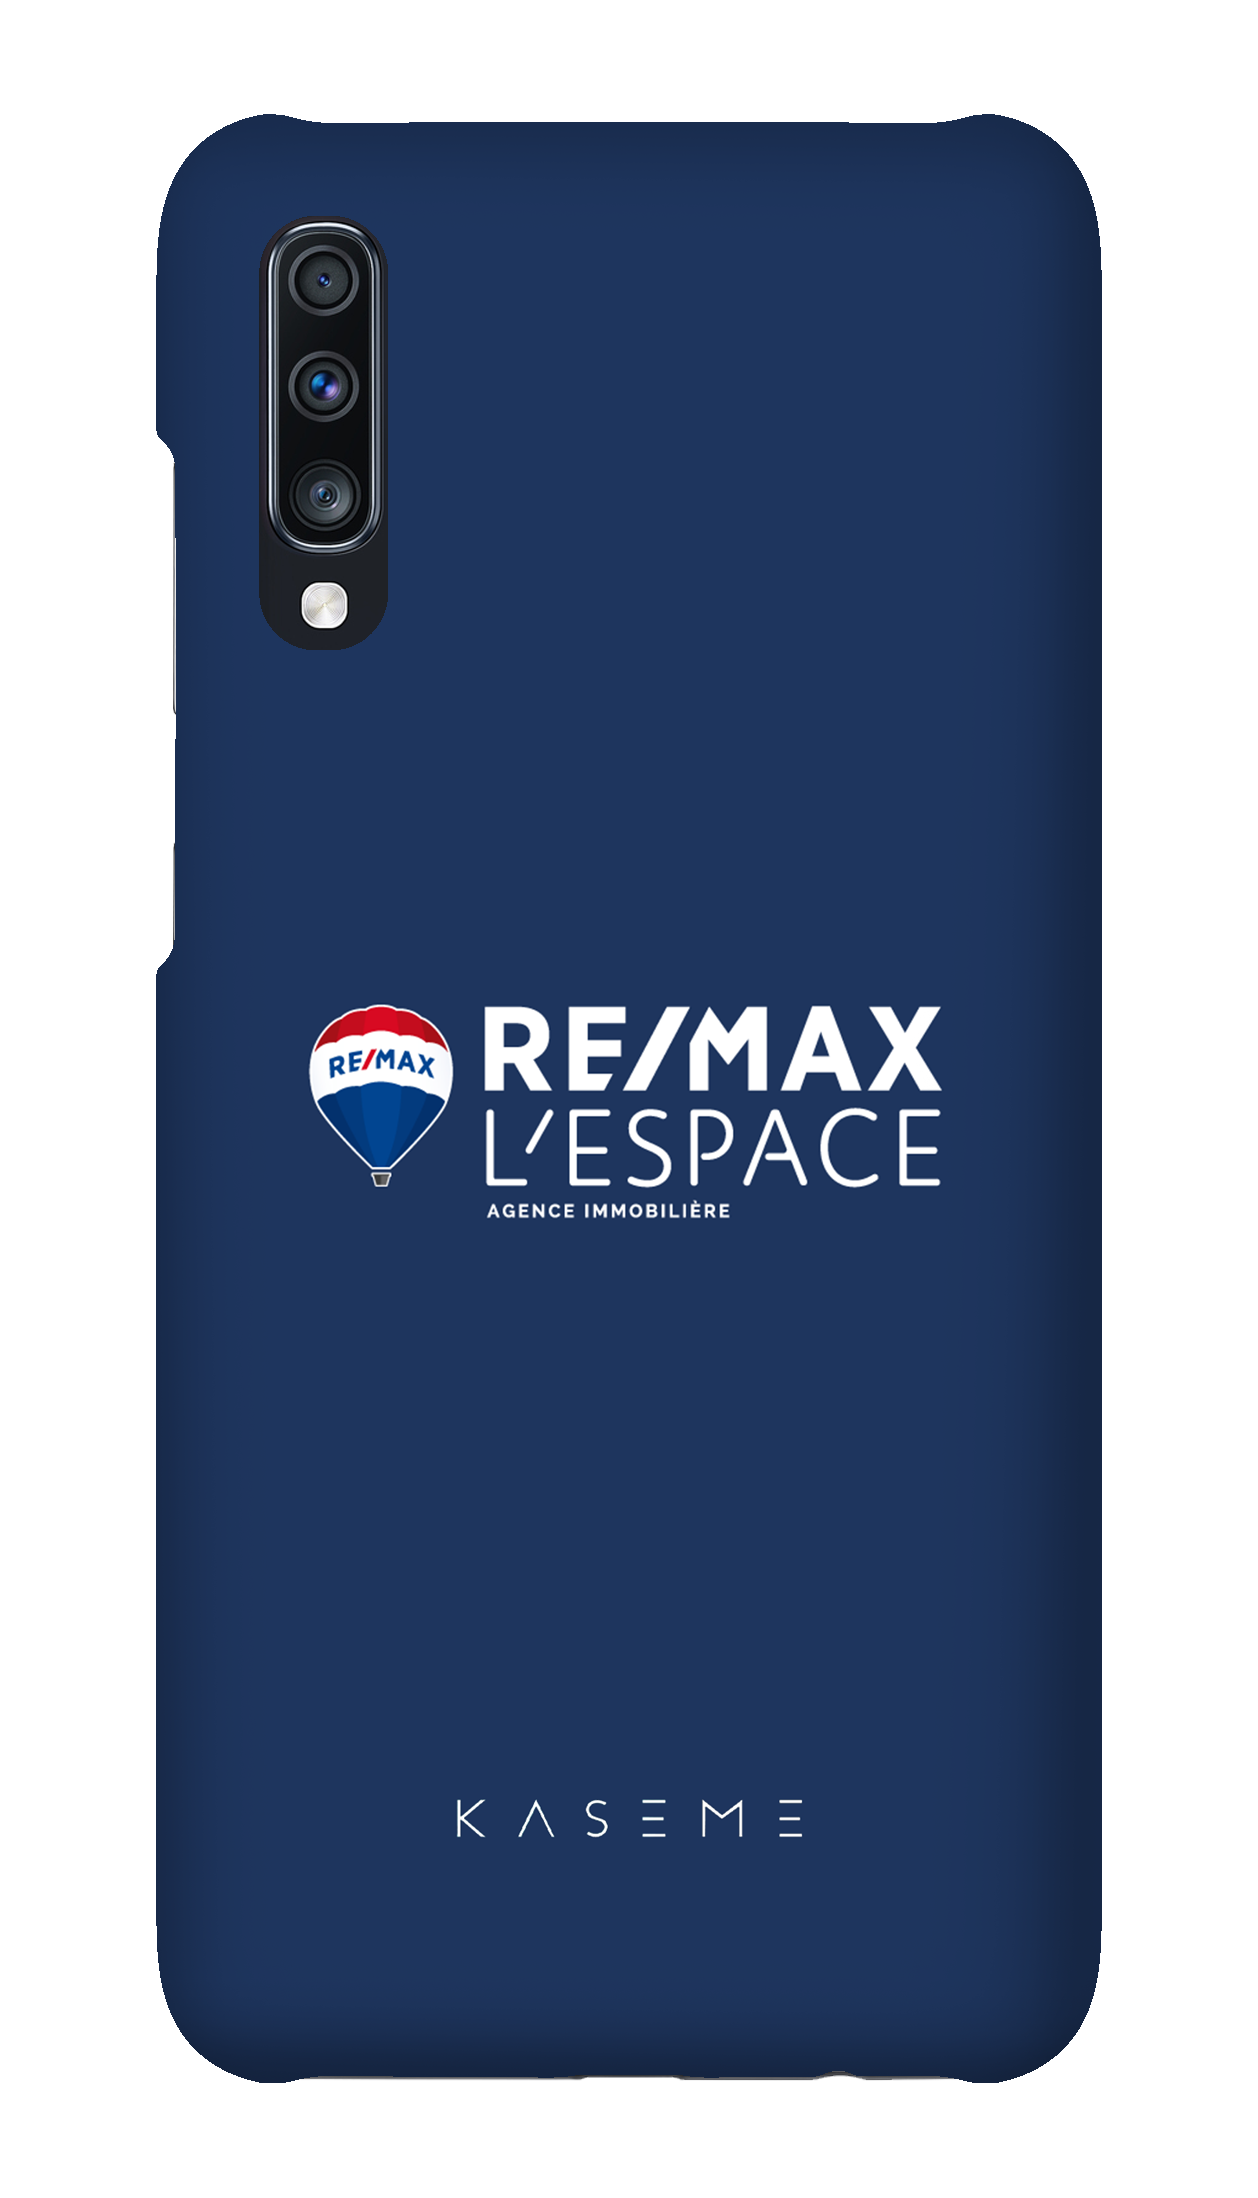 Remax L'Espace Blanc - Galaxy A70